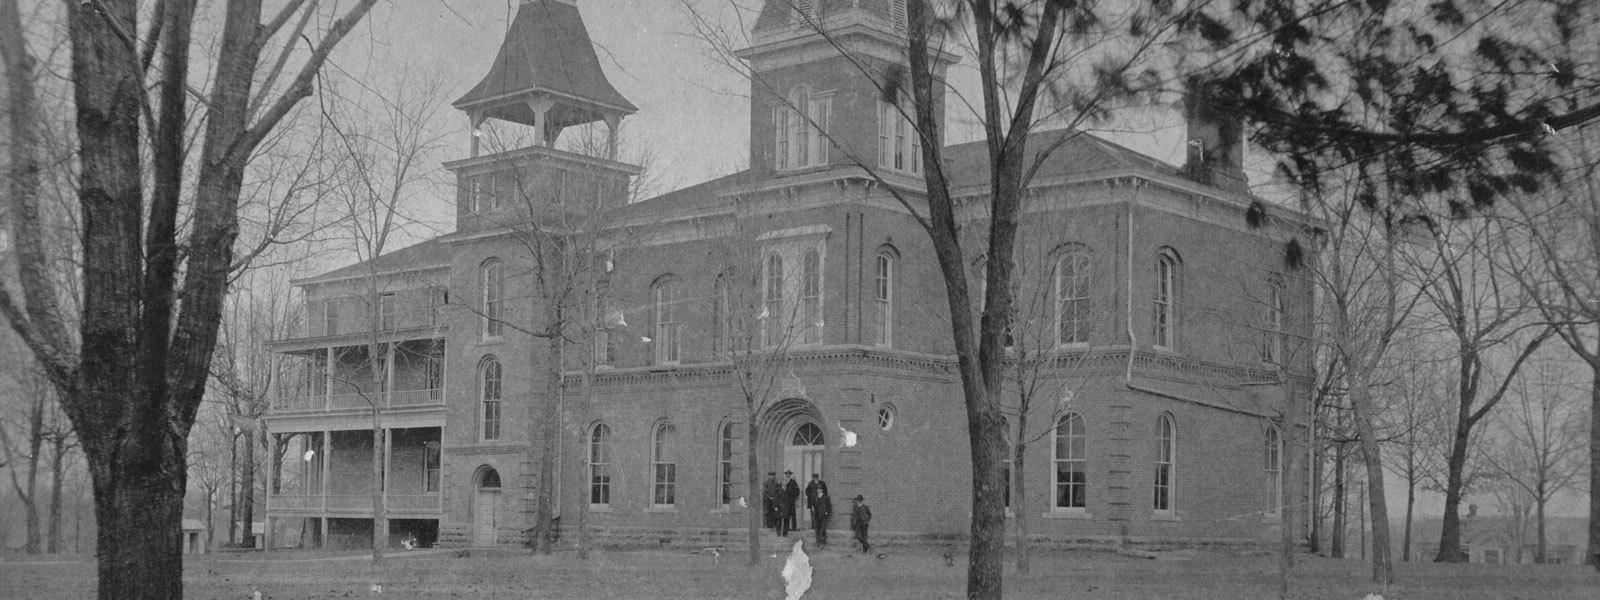 black and white photo of original campus building